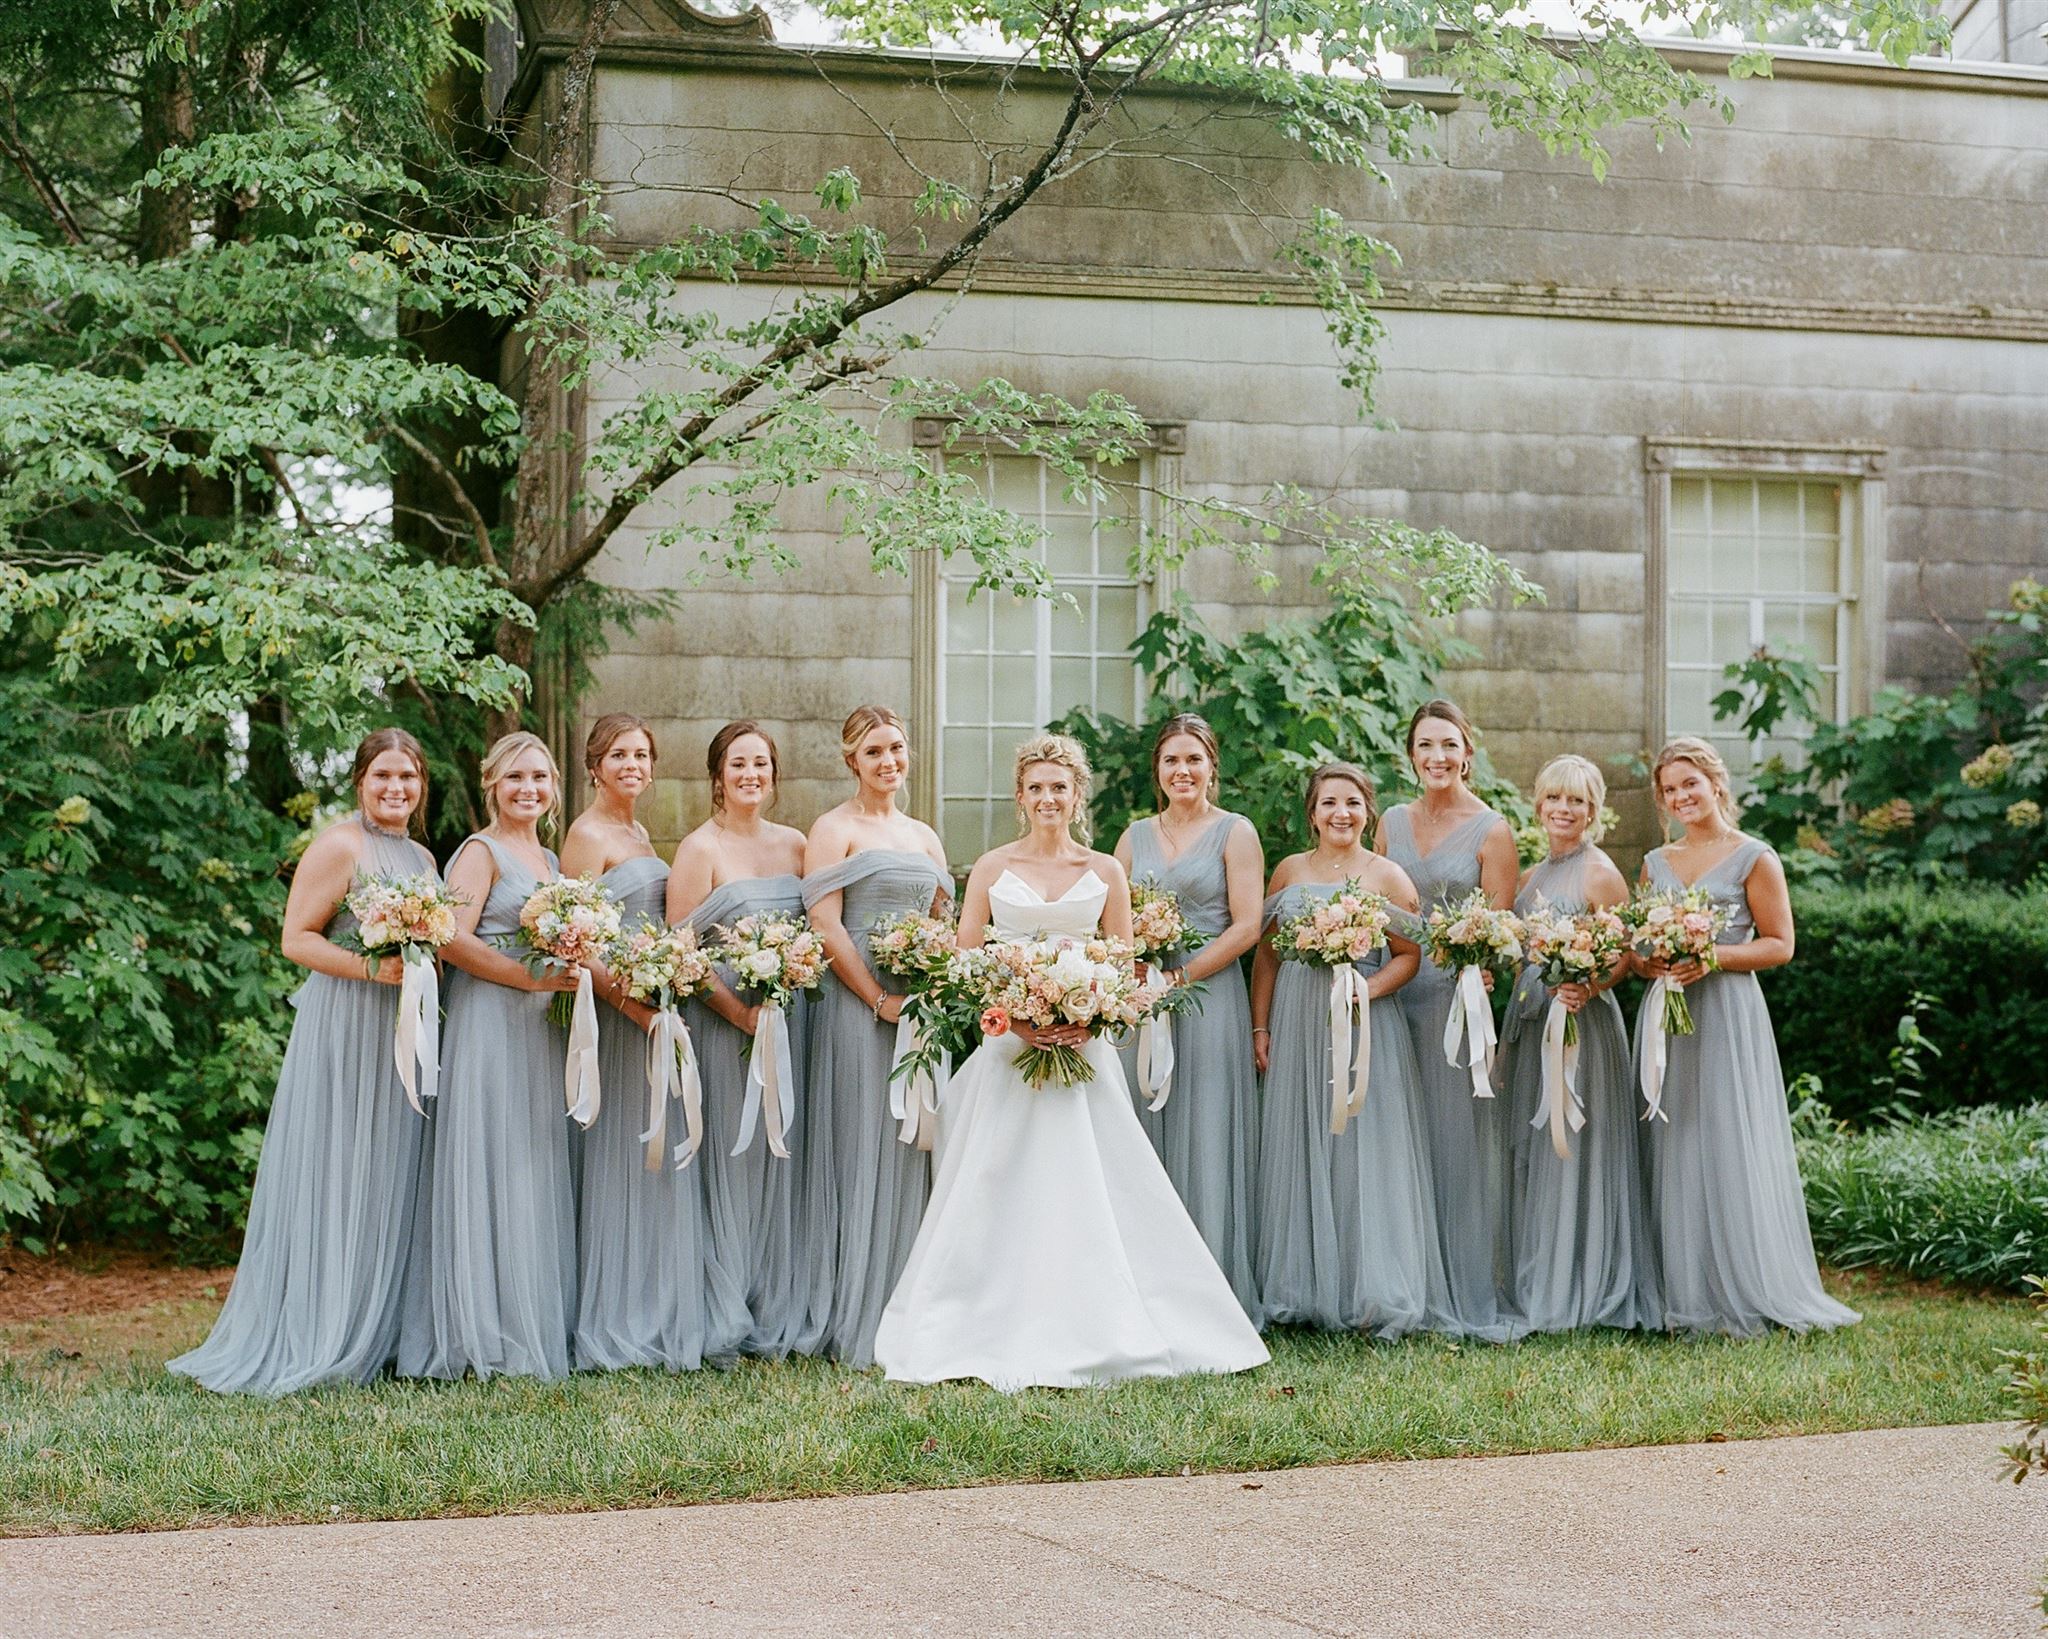 Bride and bridesmaids posing in front of venue